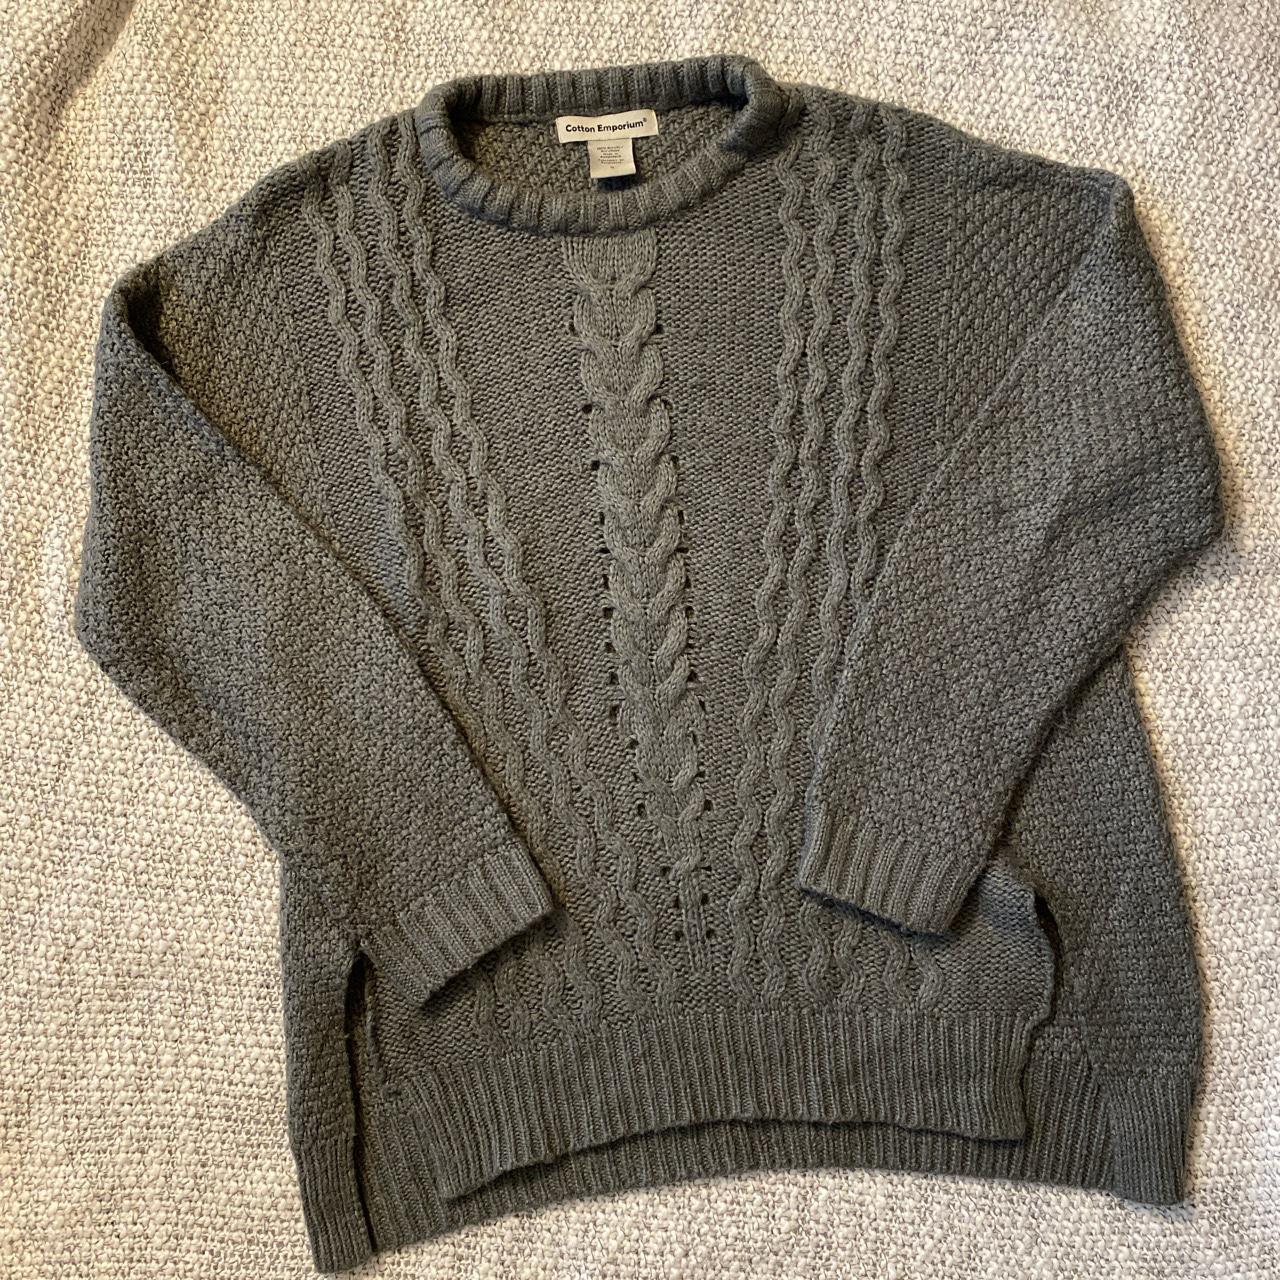 Grey fisherman’s sweater - Depop